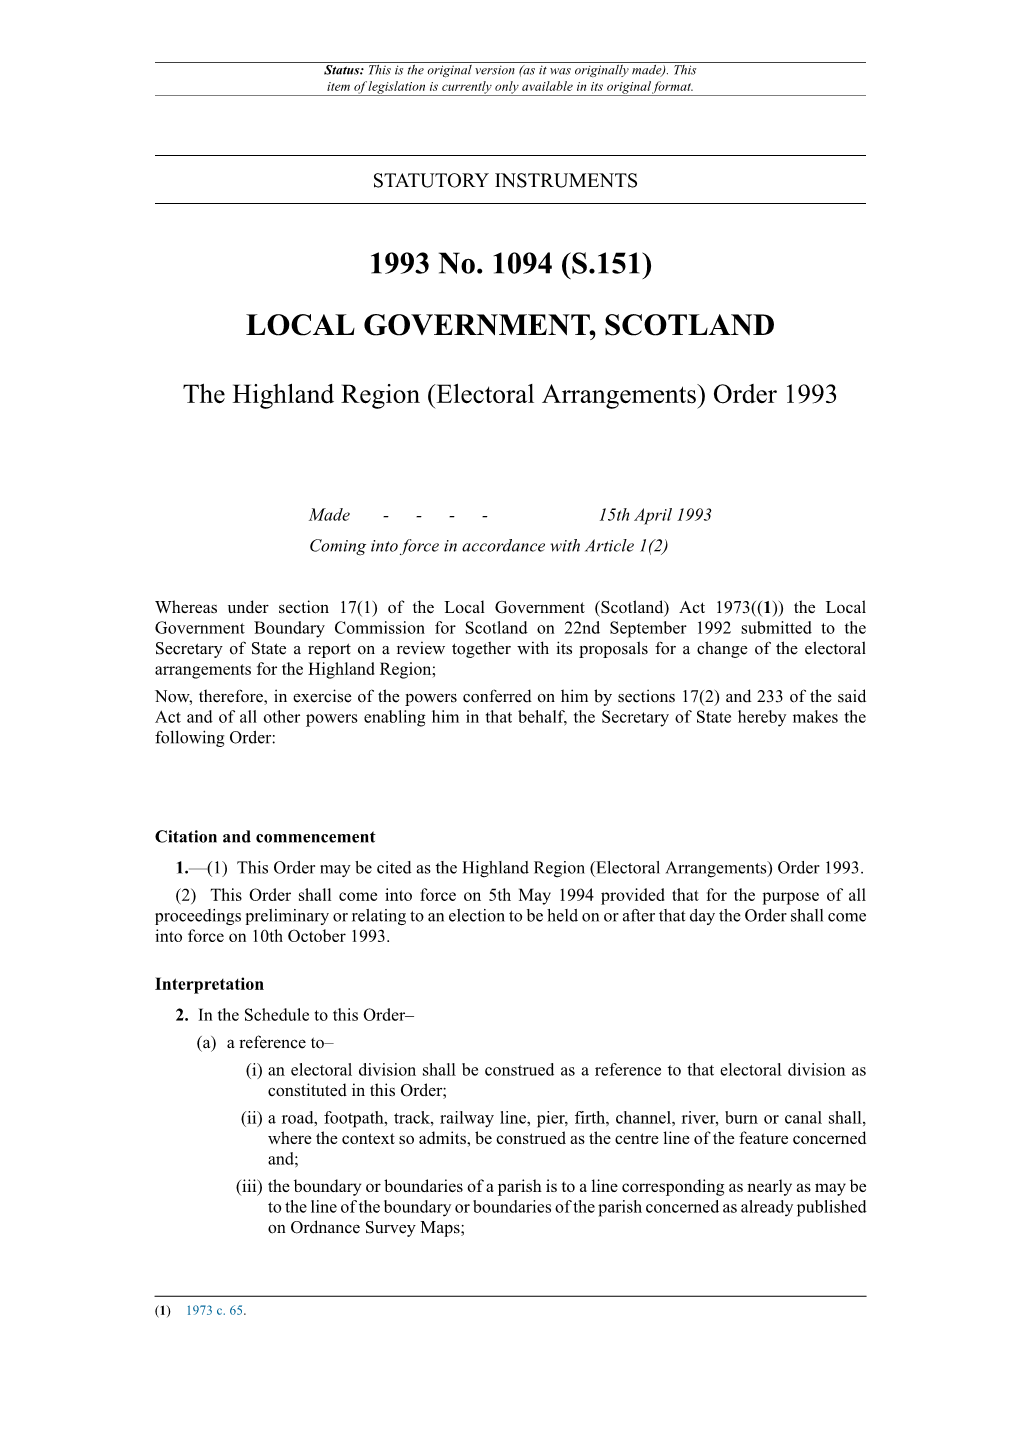 The Highland Region (Electoral Arrangements) Order 1993